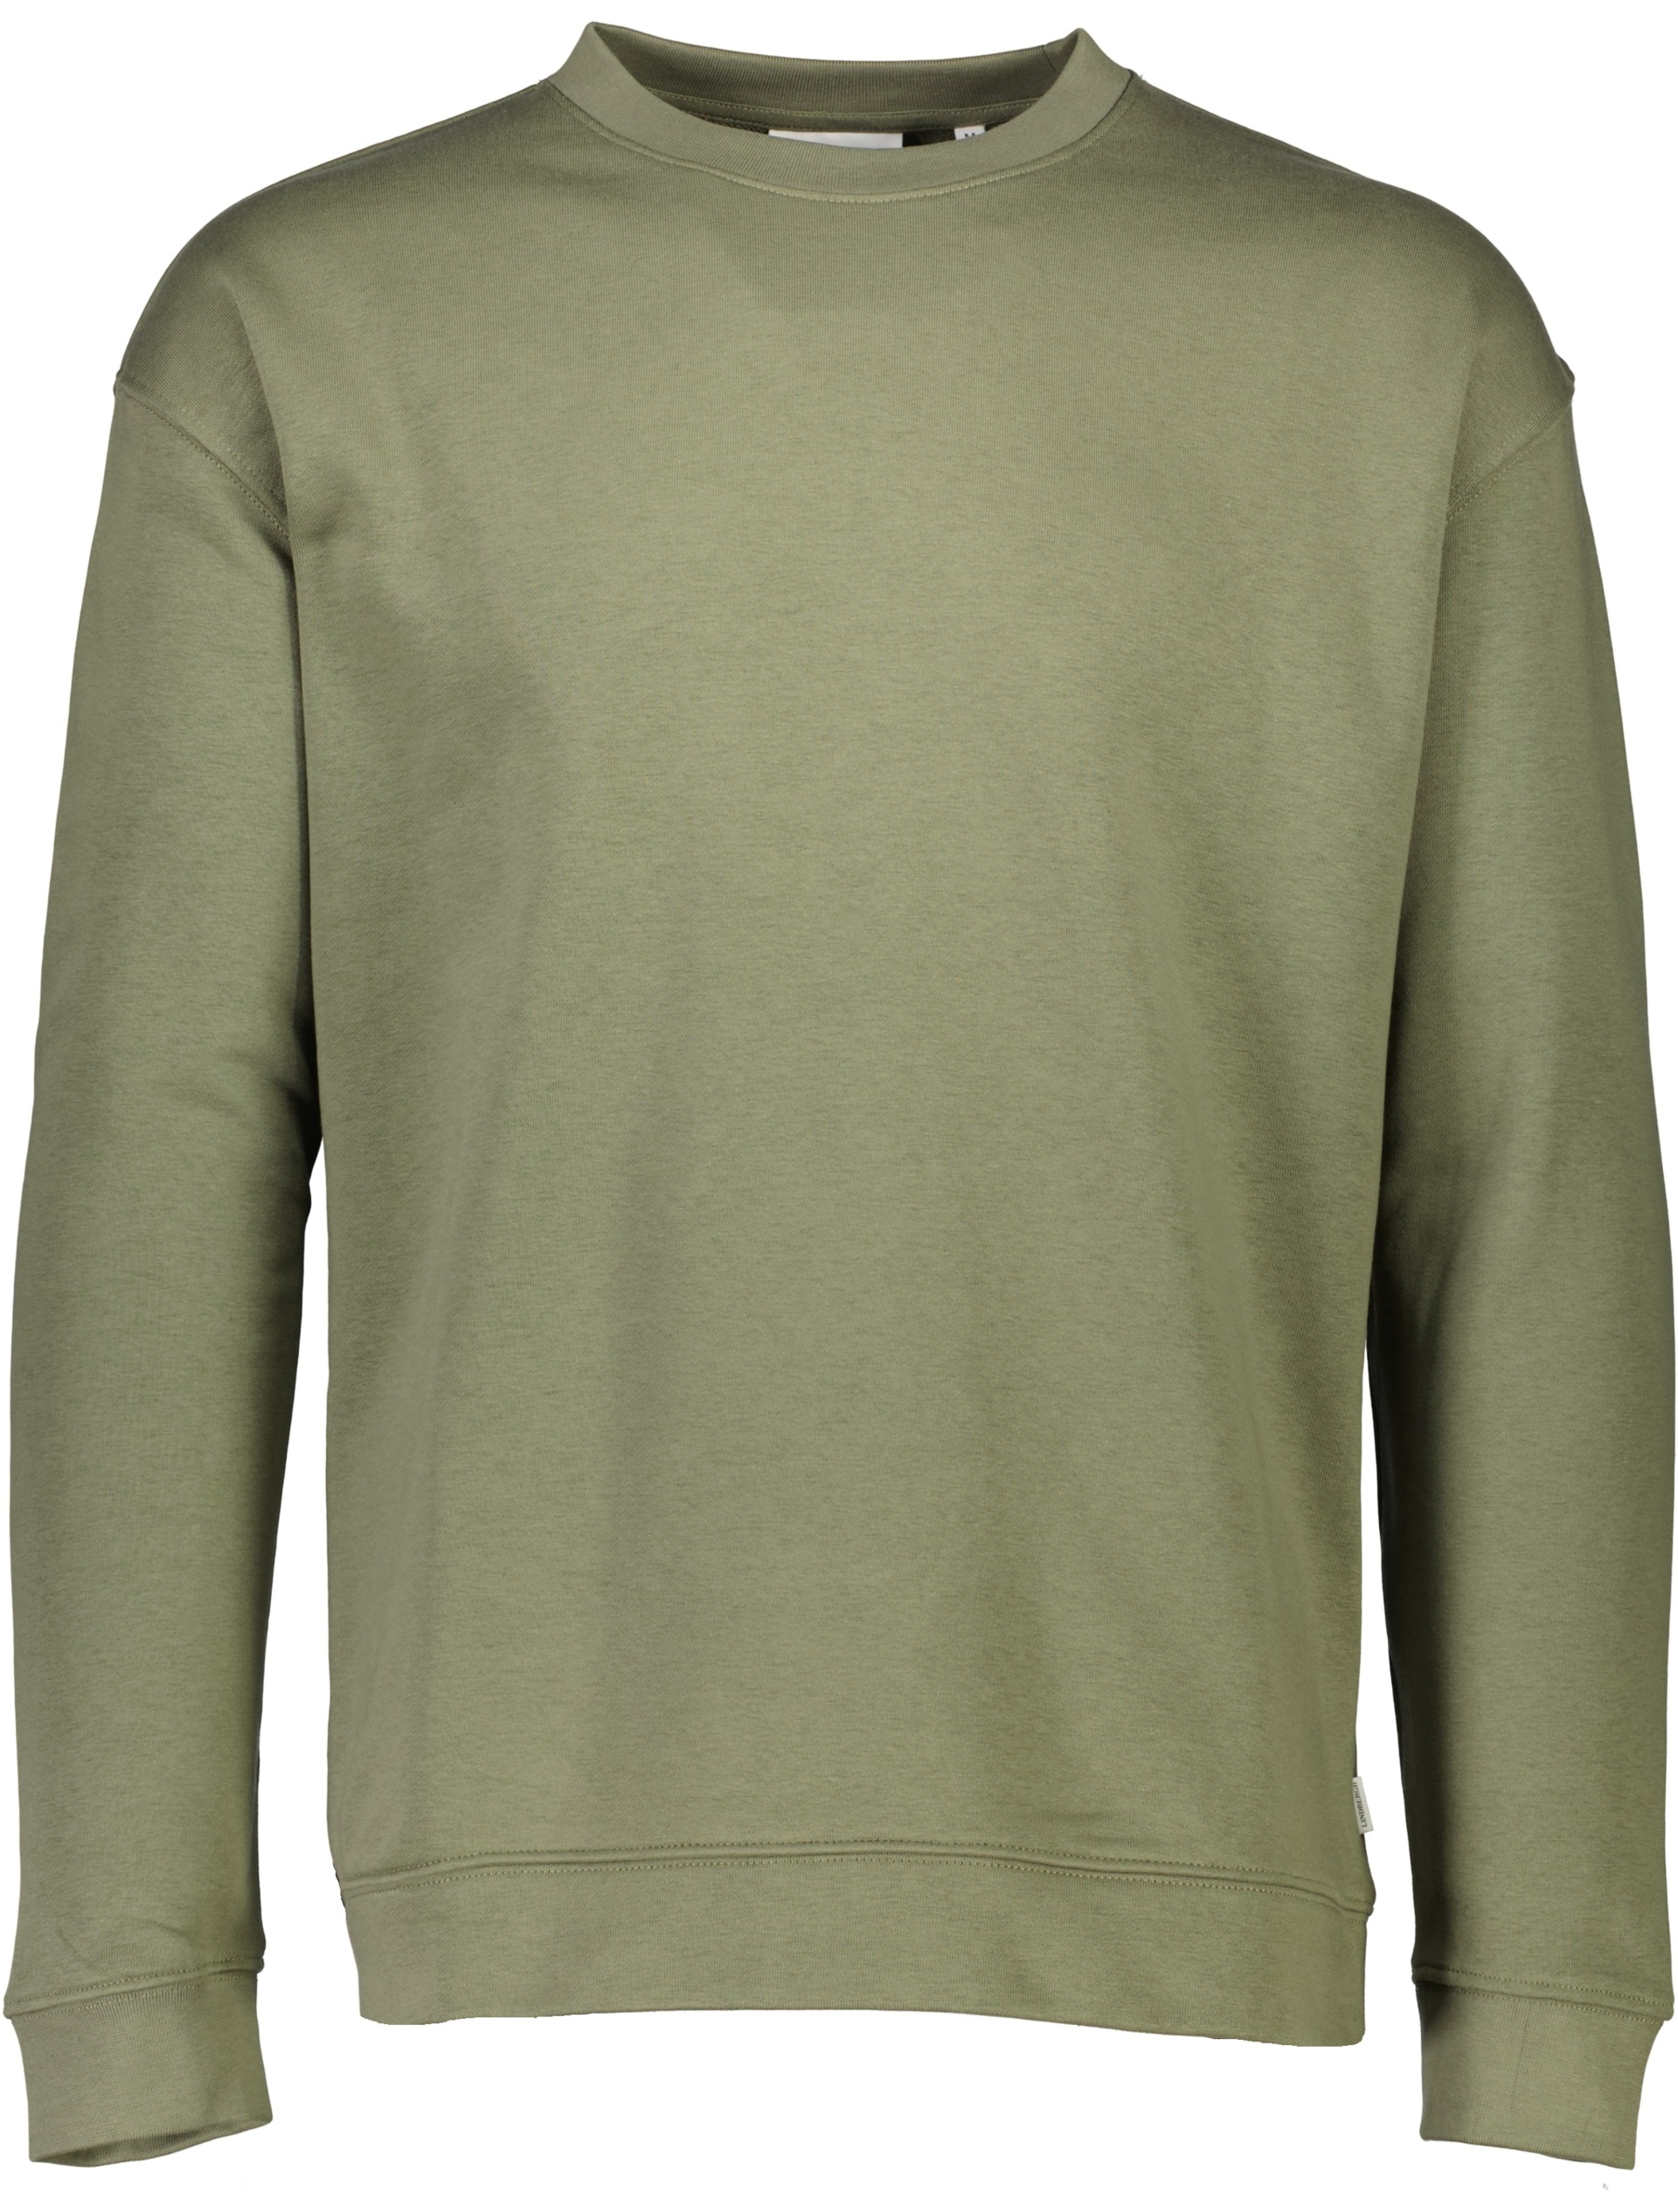 Lindbergh Sweater groen / army